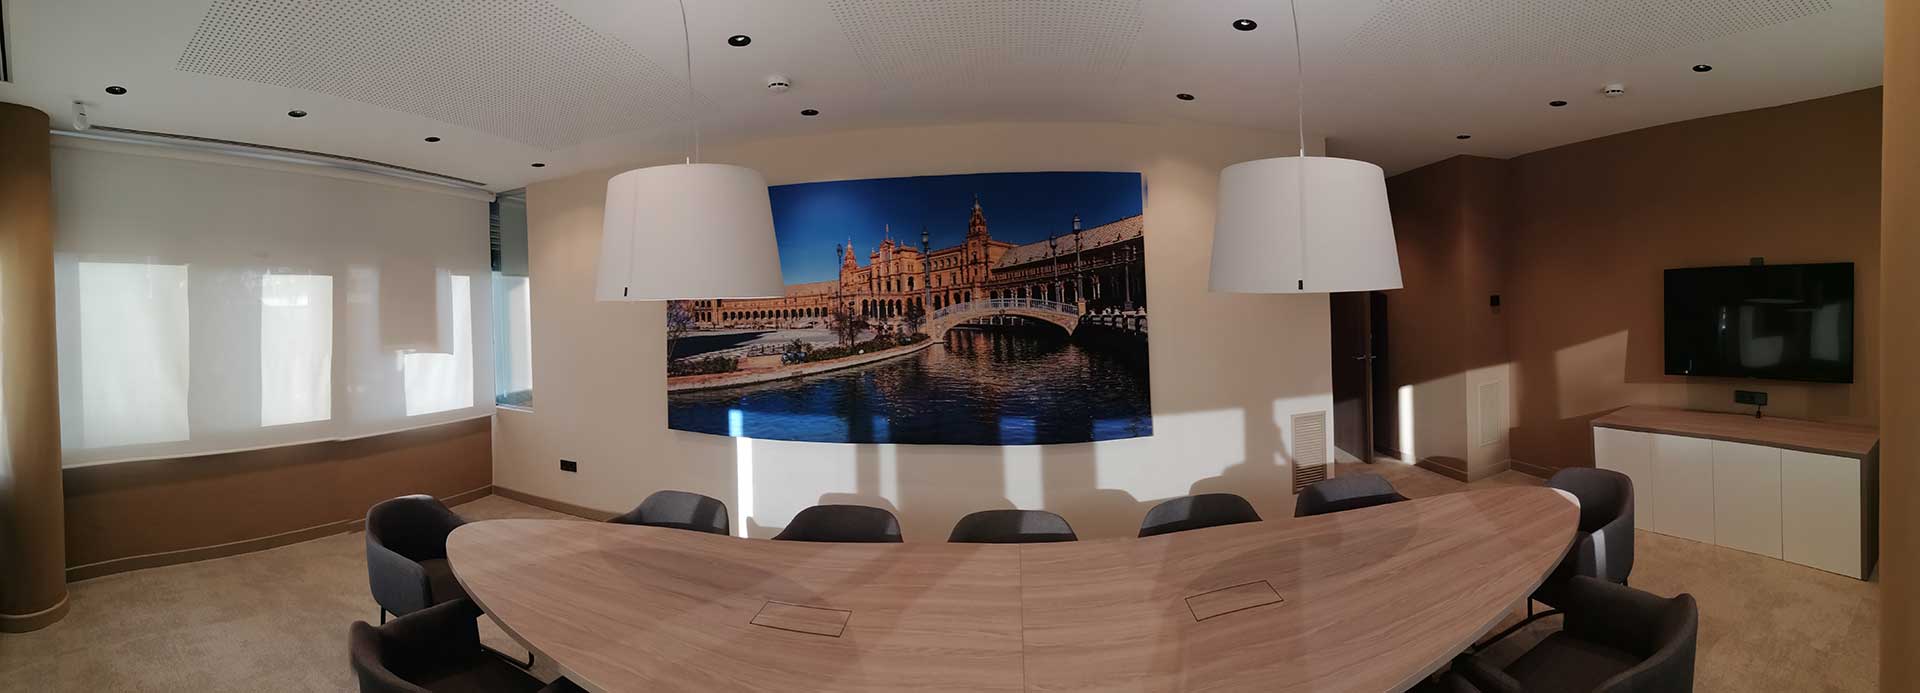 Sala de reuniones de oficina Caixabank en Sevilla